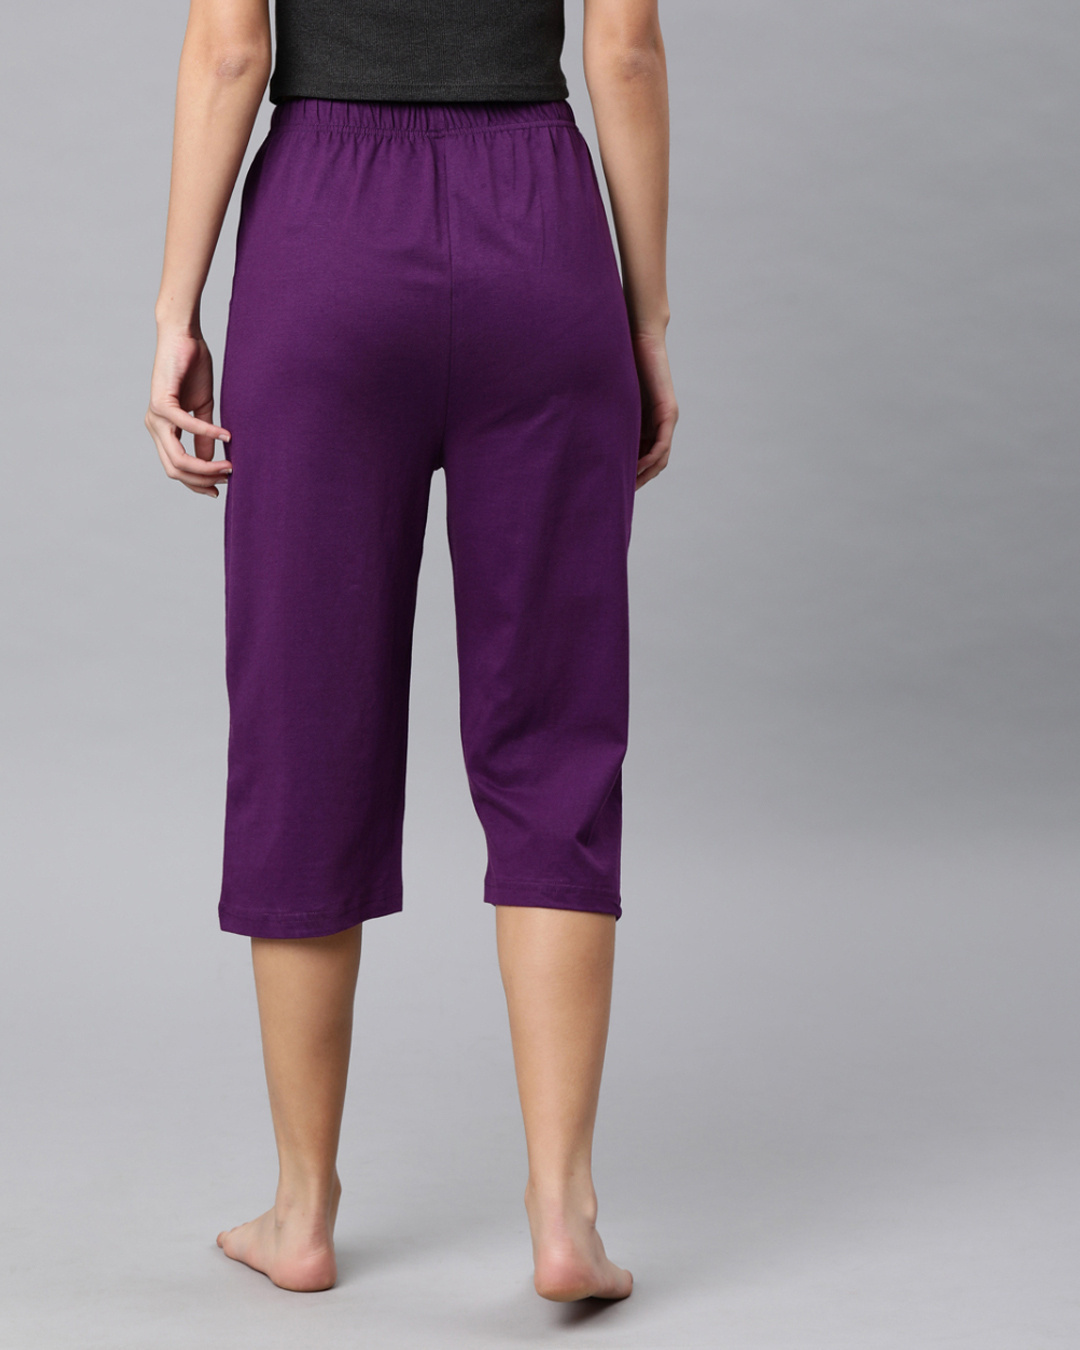 Shop Purple Solid Capri-Back